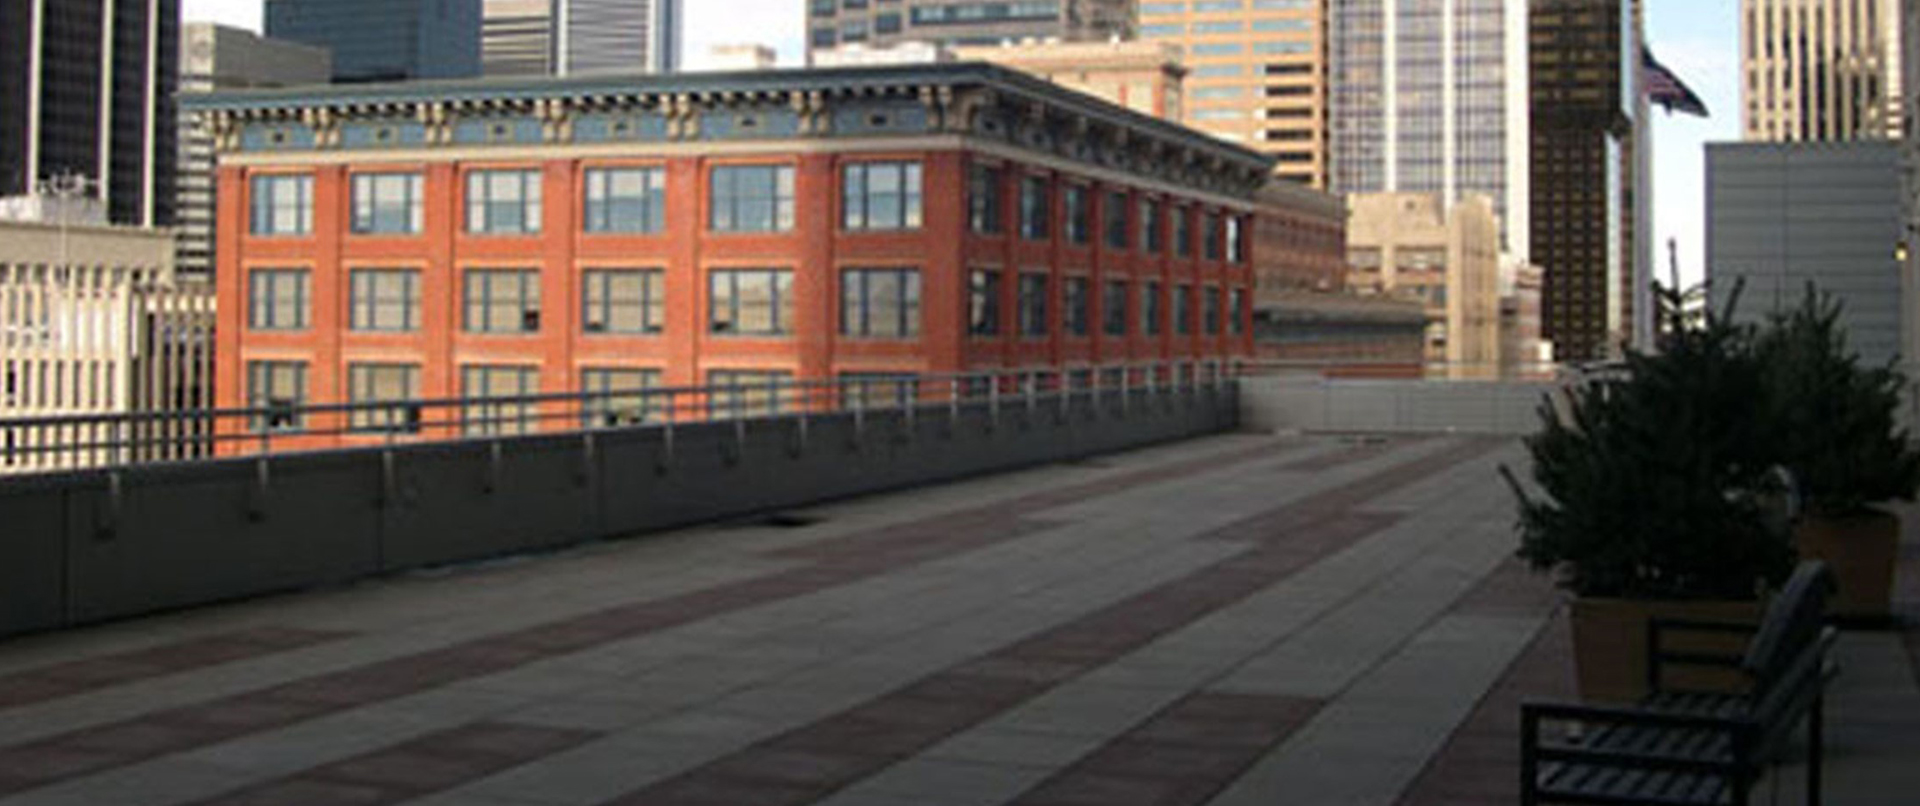 Urban Rooftop Paver Deck